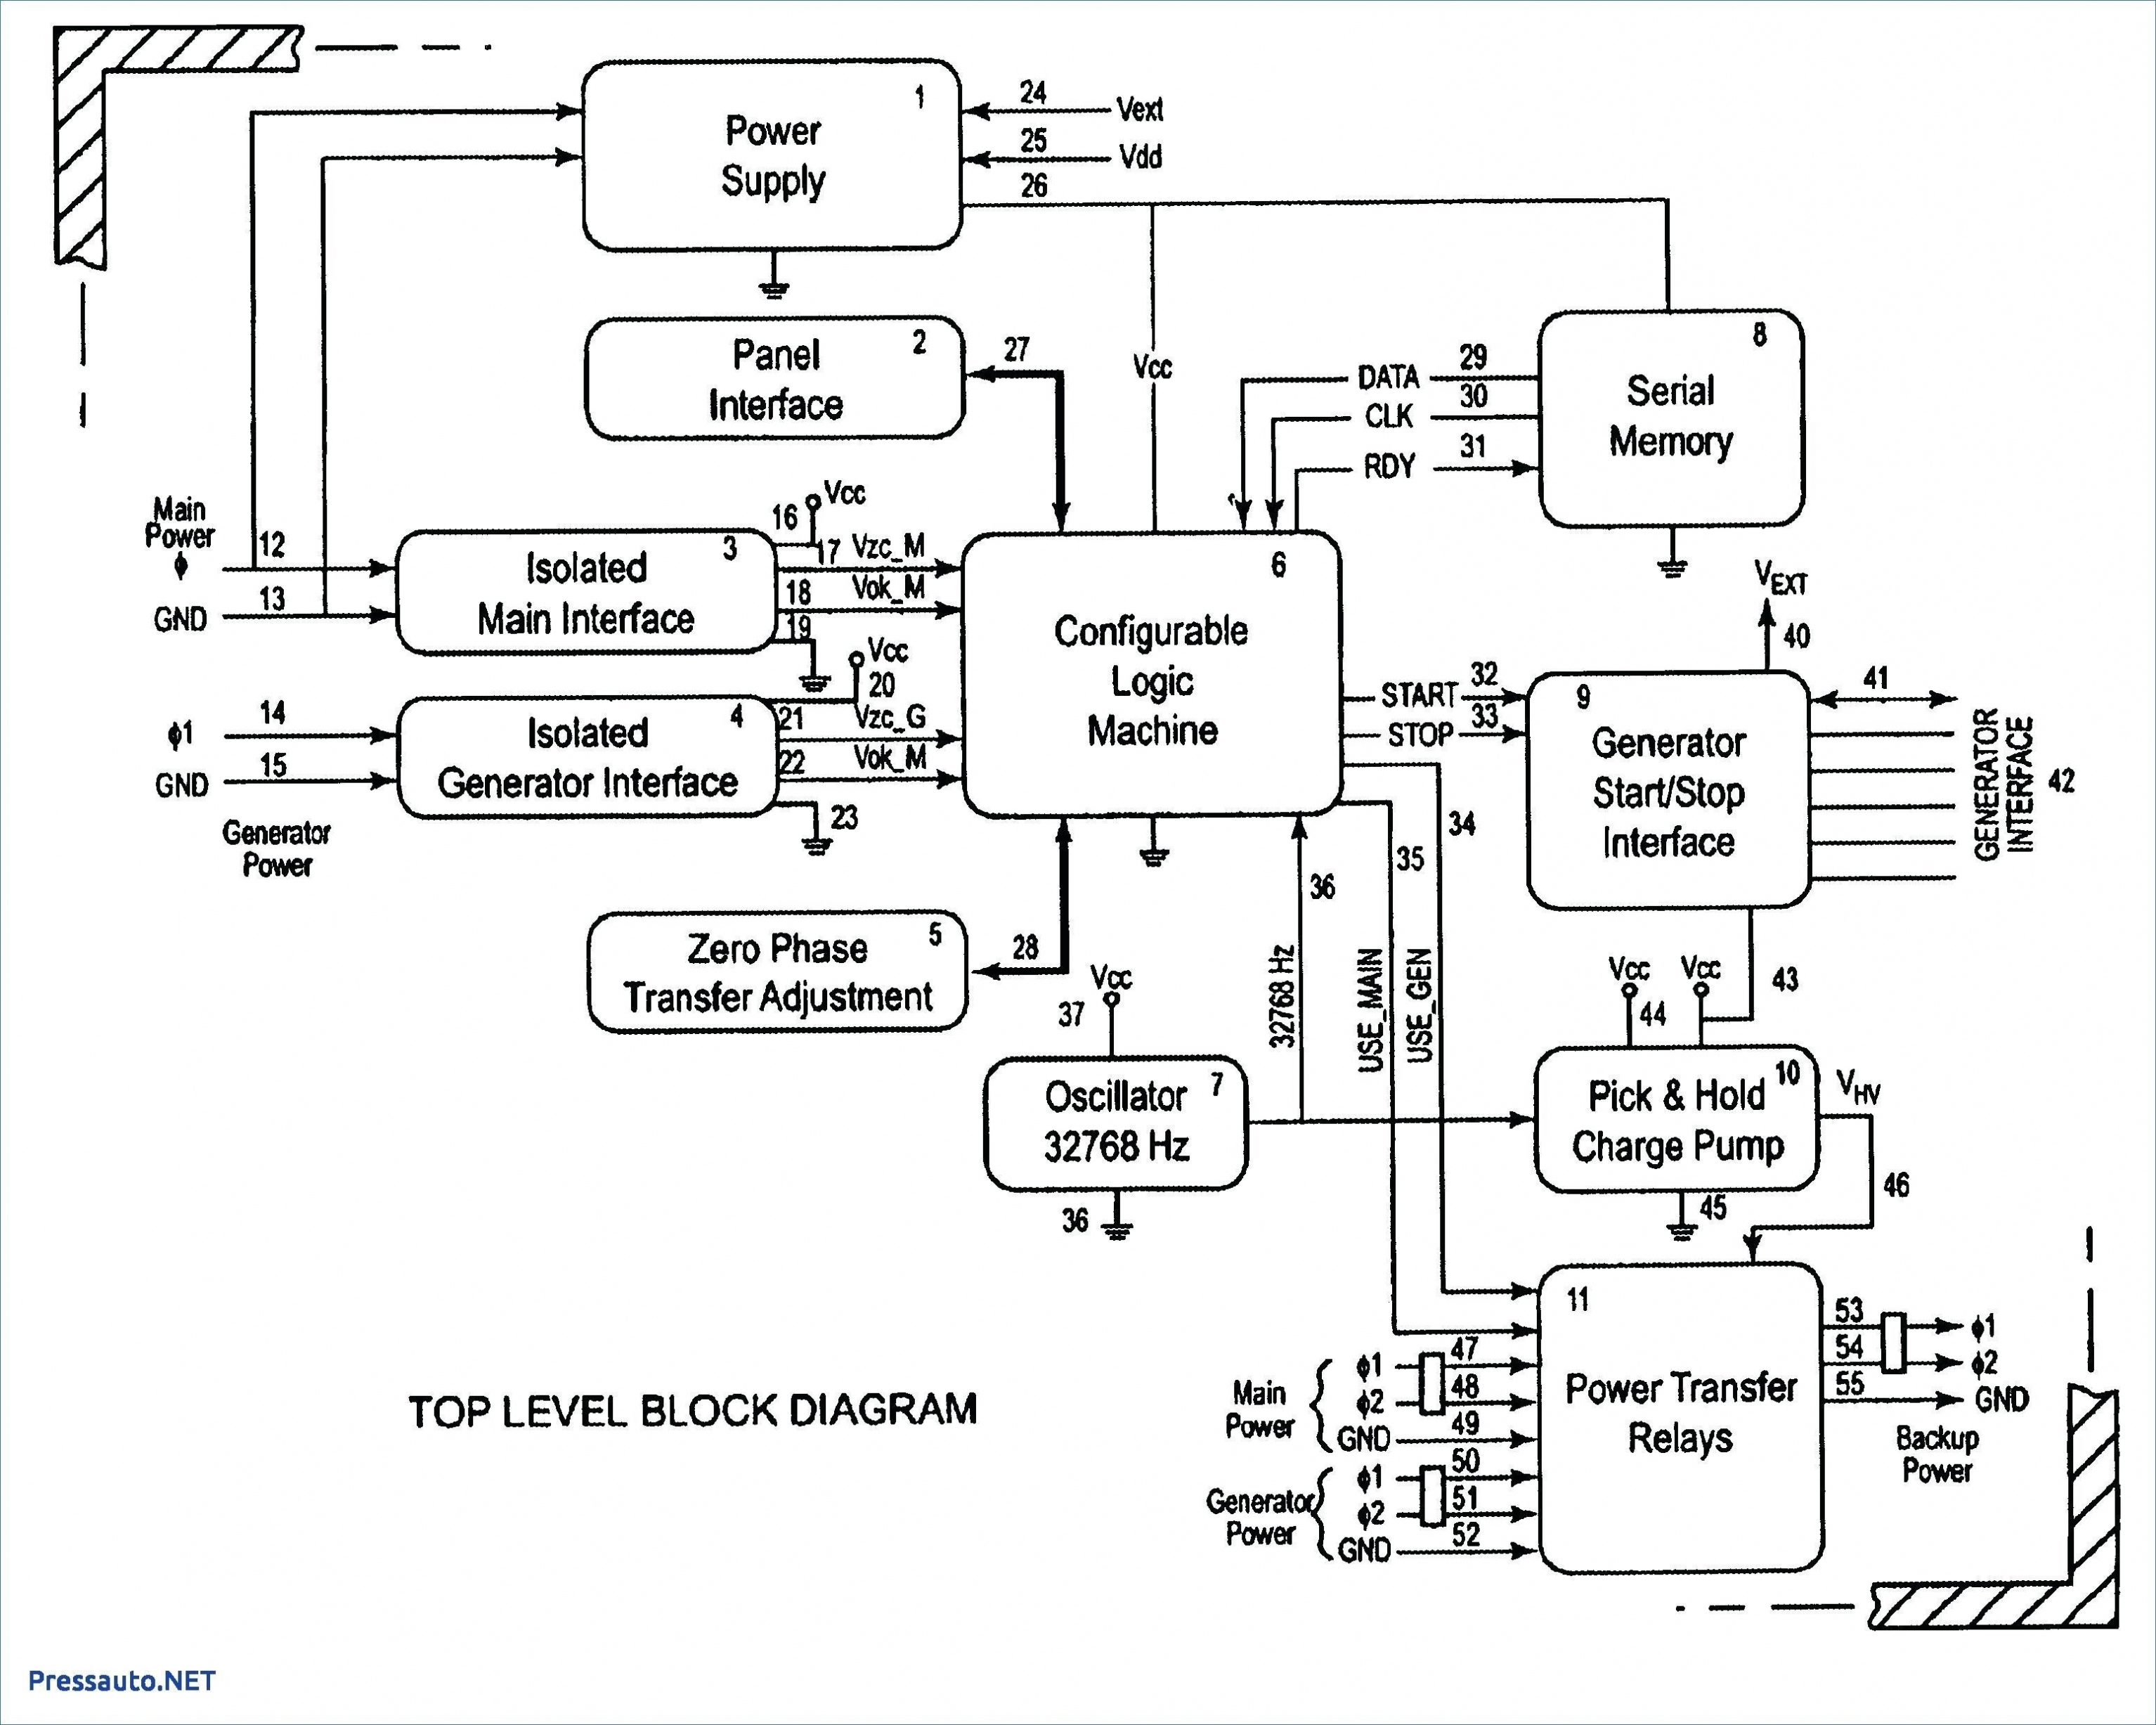 Kohler Command 23 Wiring Schematic | Wiring Library - Kohler Command Wiring Diagram